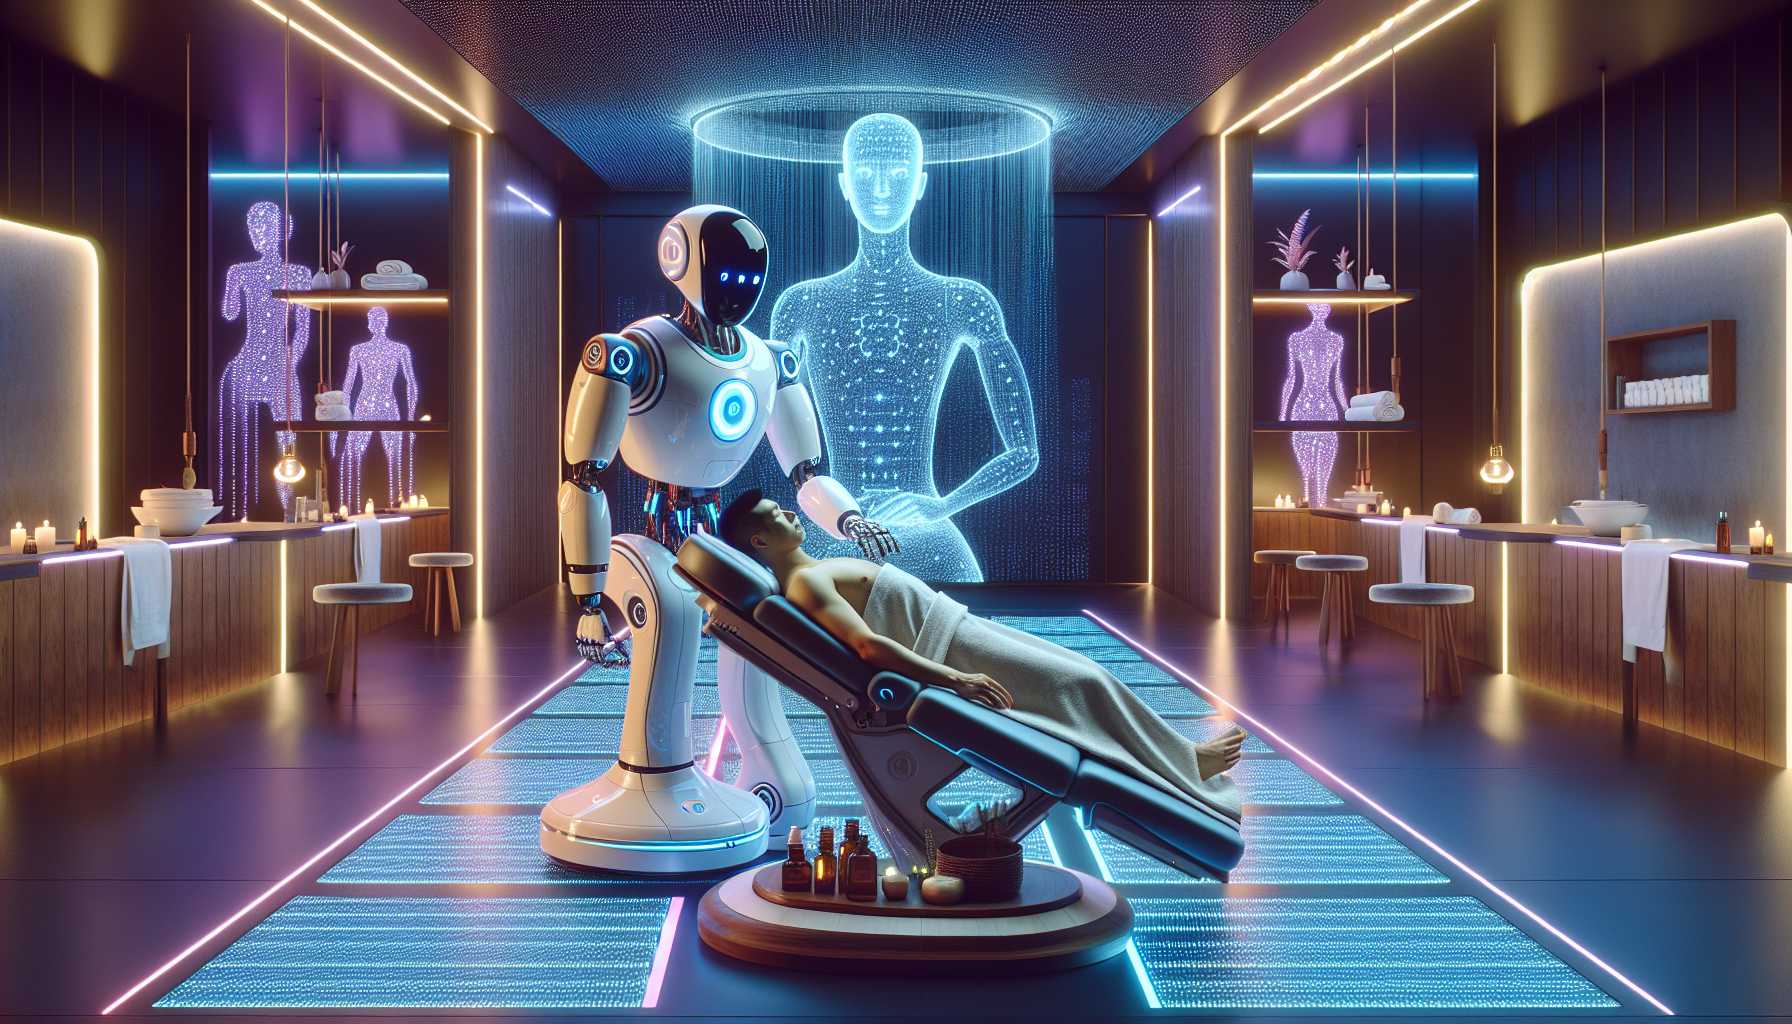 AI massage robot working on a human in a futuristic spa setting